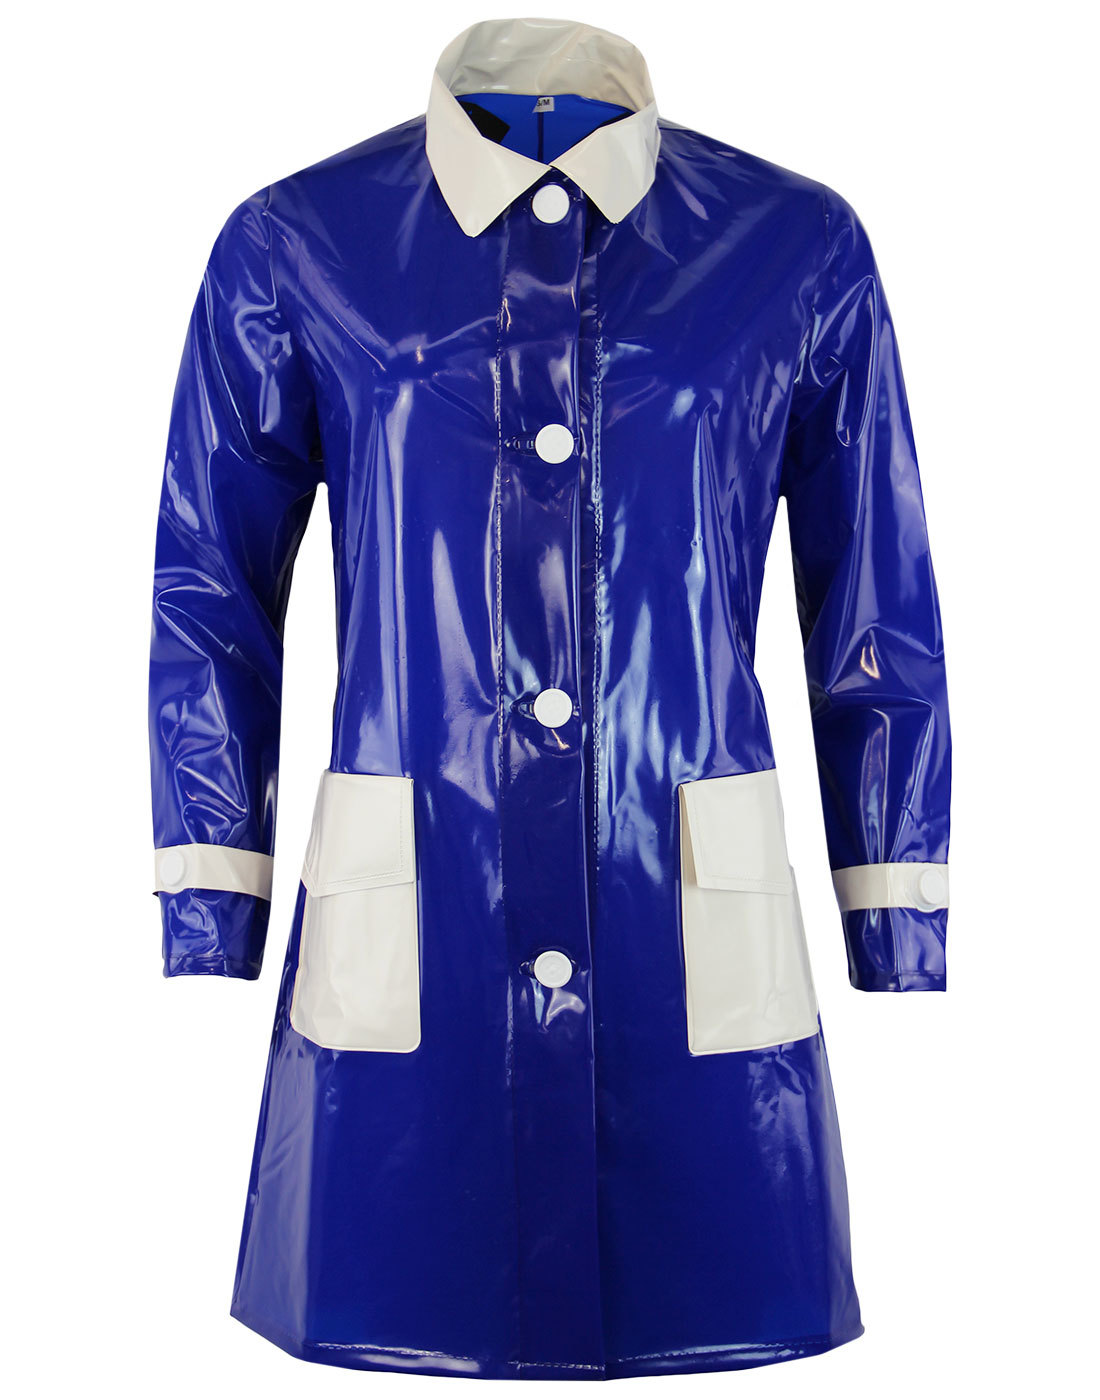 madcap england robin 60s mod pvc raincoat blue